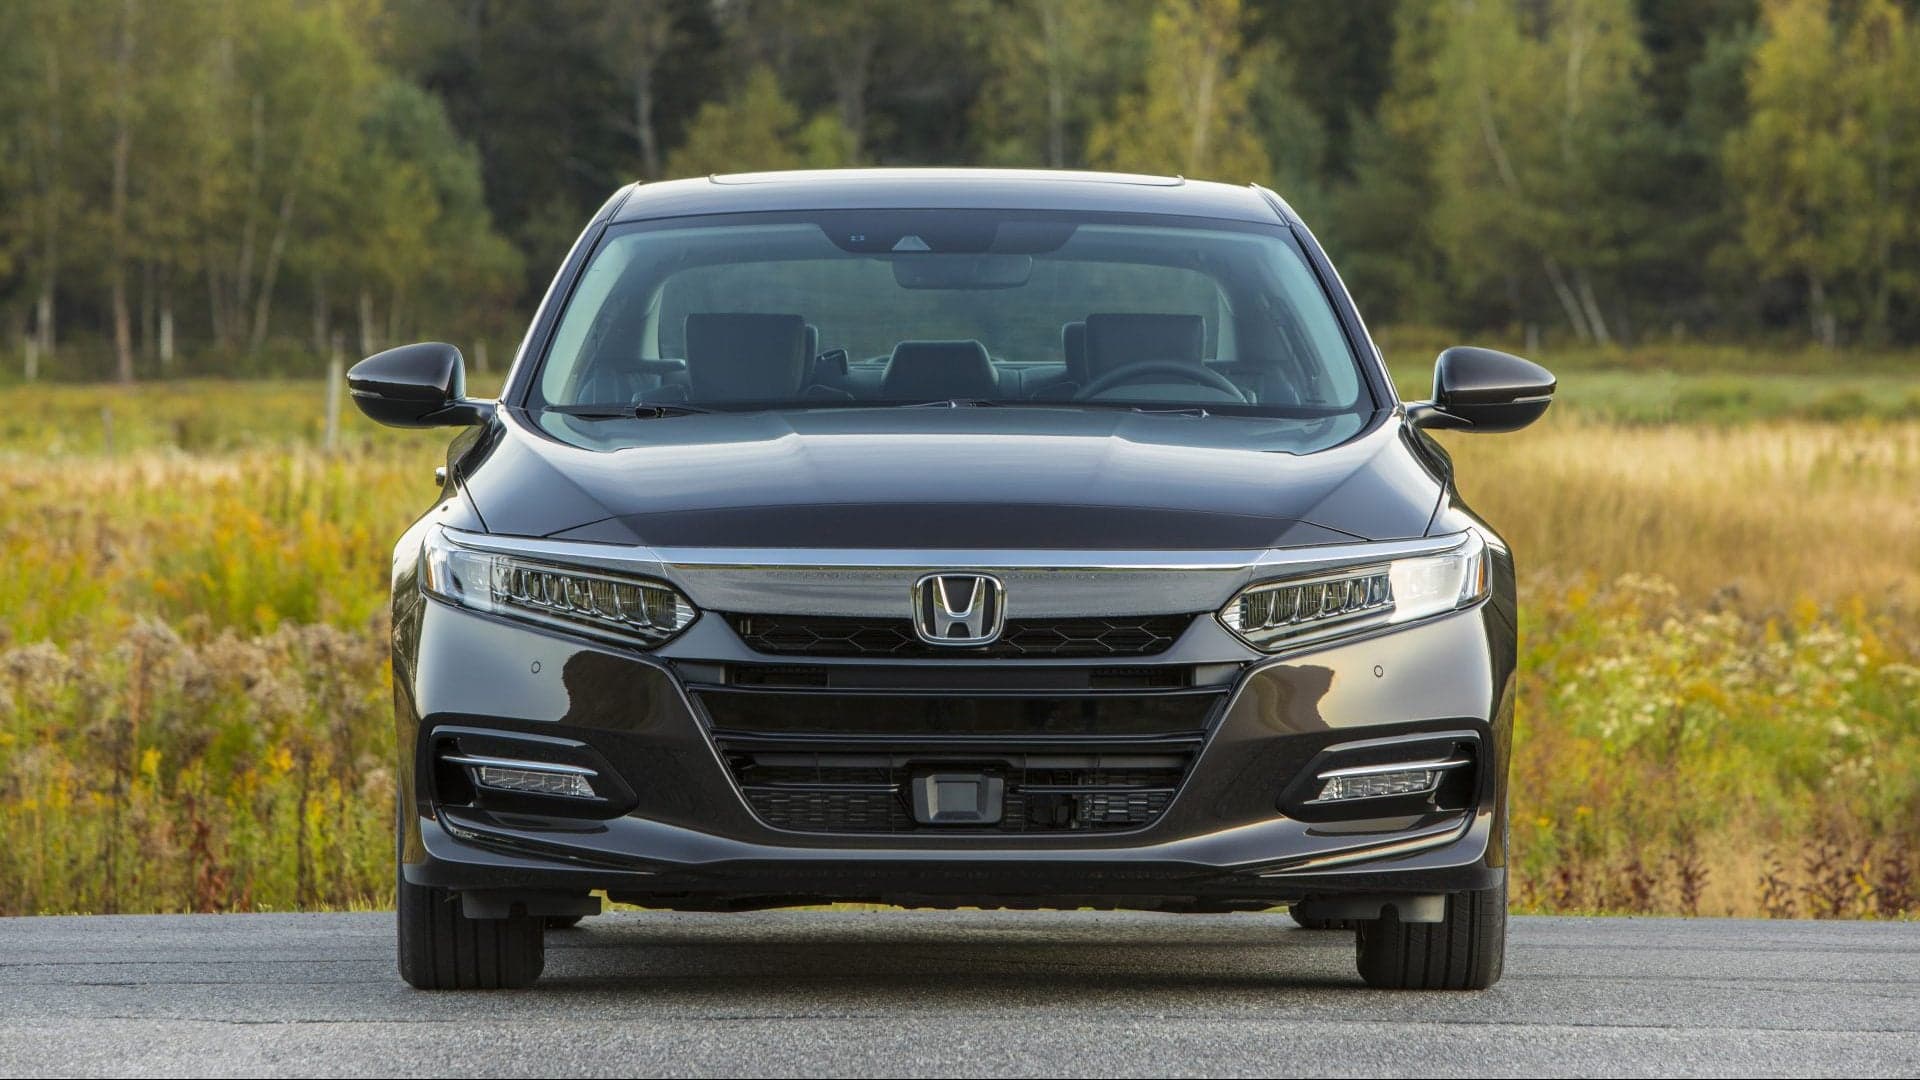 Honda Sensing Safety Tech Will Be Standard on All Hondas in 2022